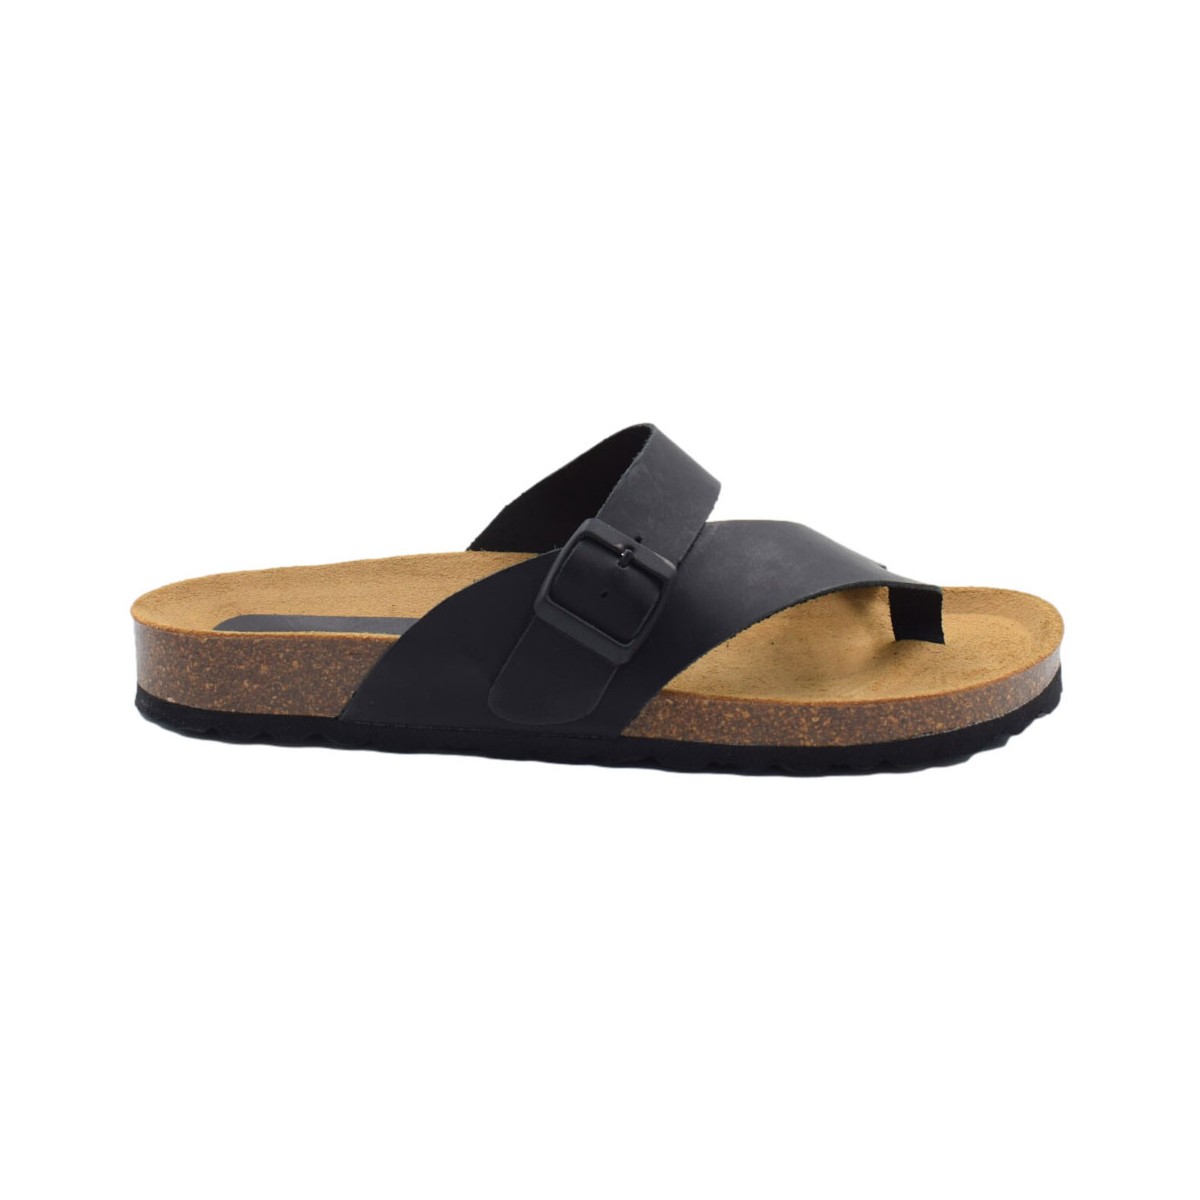 Organic black eco-friendly leather sandals by Biocomfort